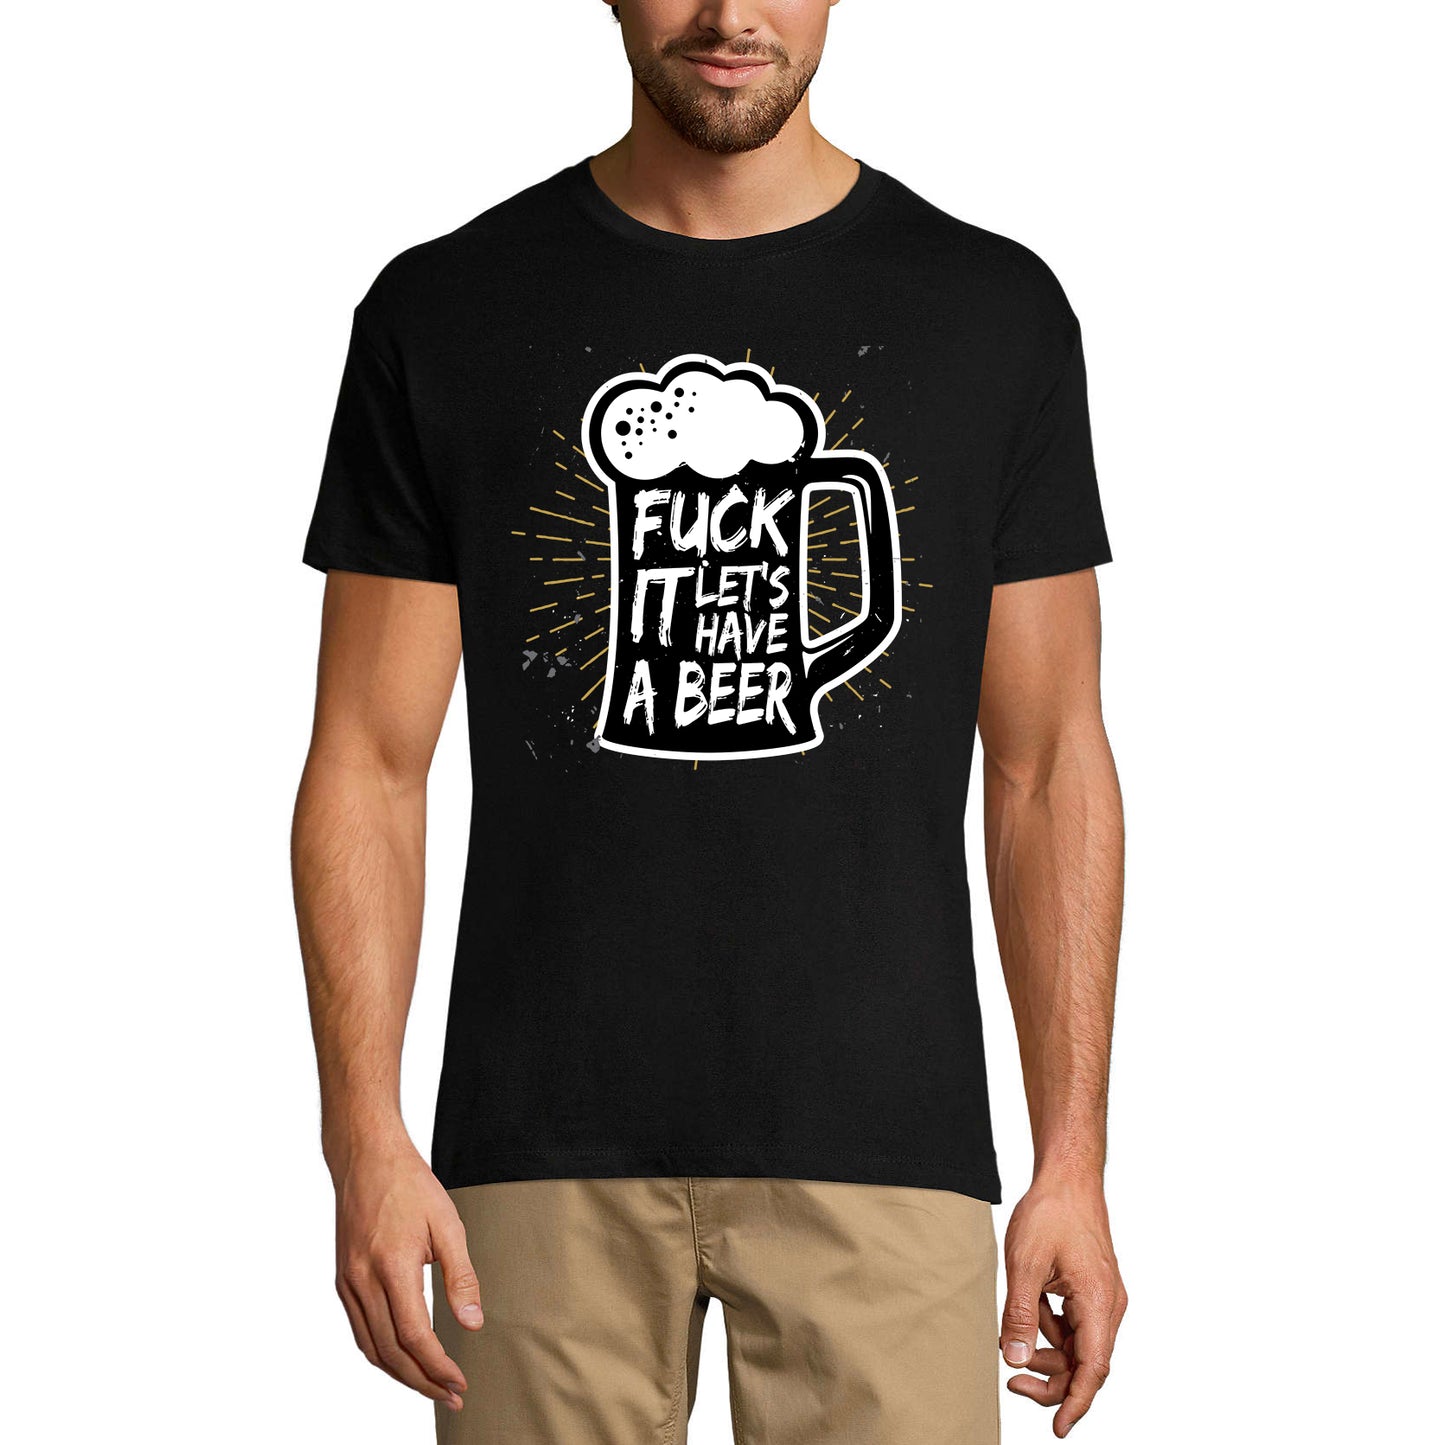 ULTRABASIC Men's Novelty T-Shirt Fuck It Let's Have a Beer - Funny Beer Lover Tee Shirt